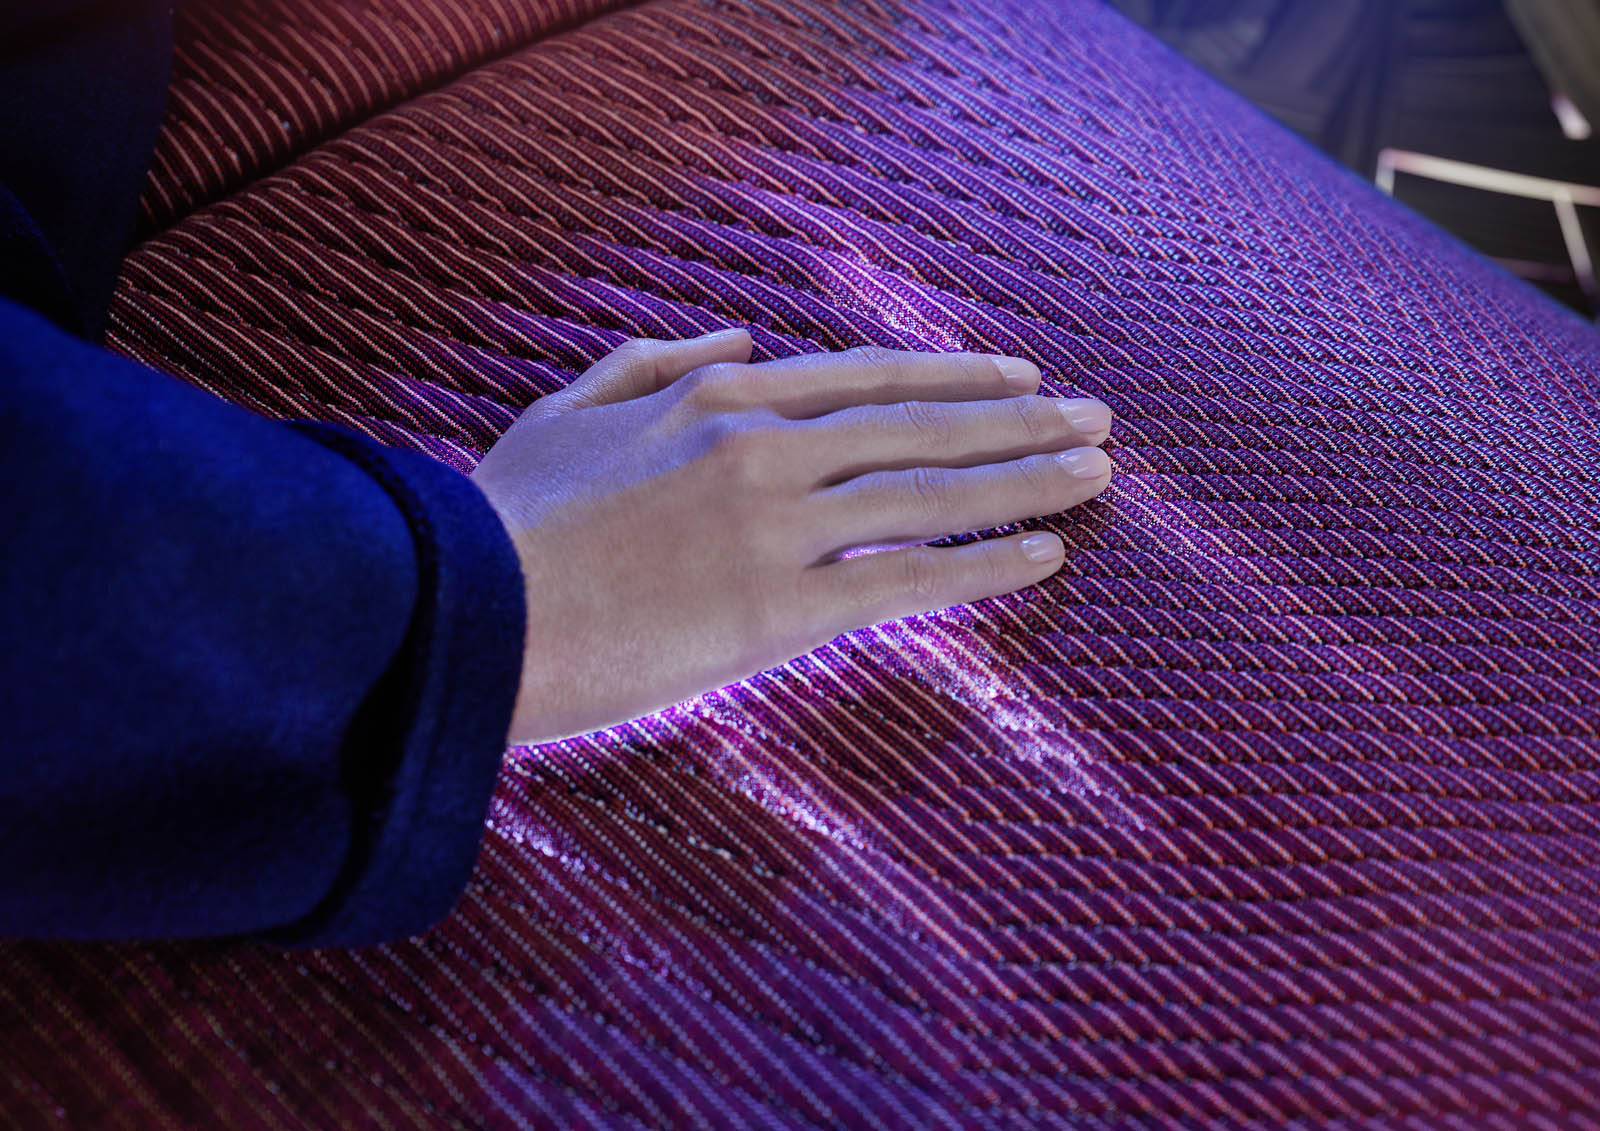 BMW unveils interactive textile interior Textile Technology Source